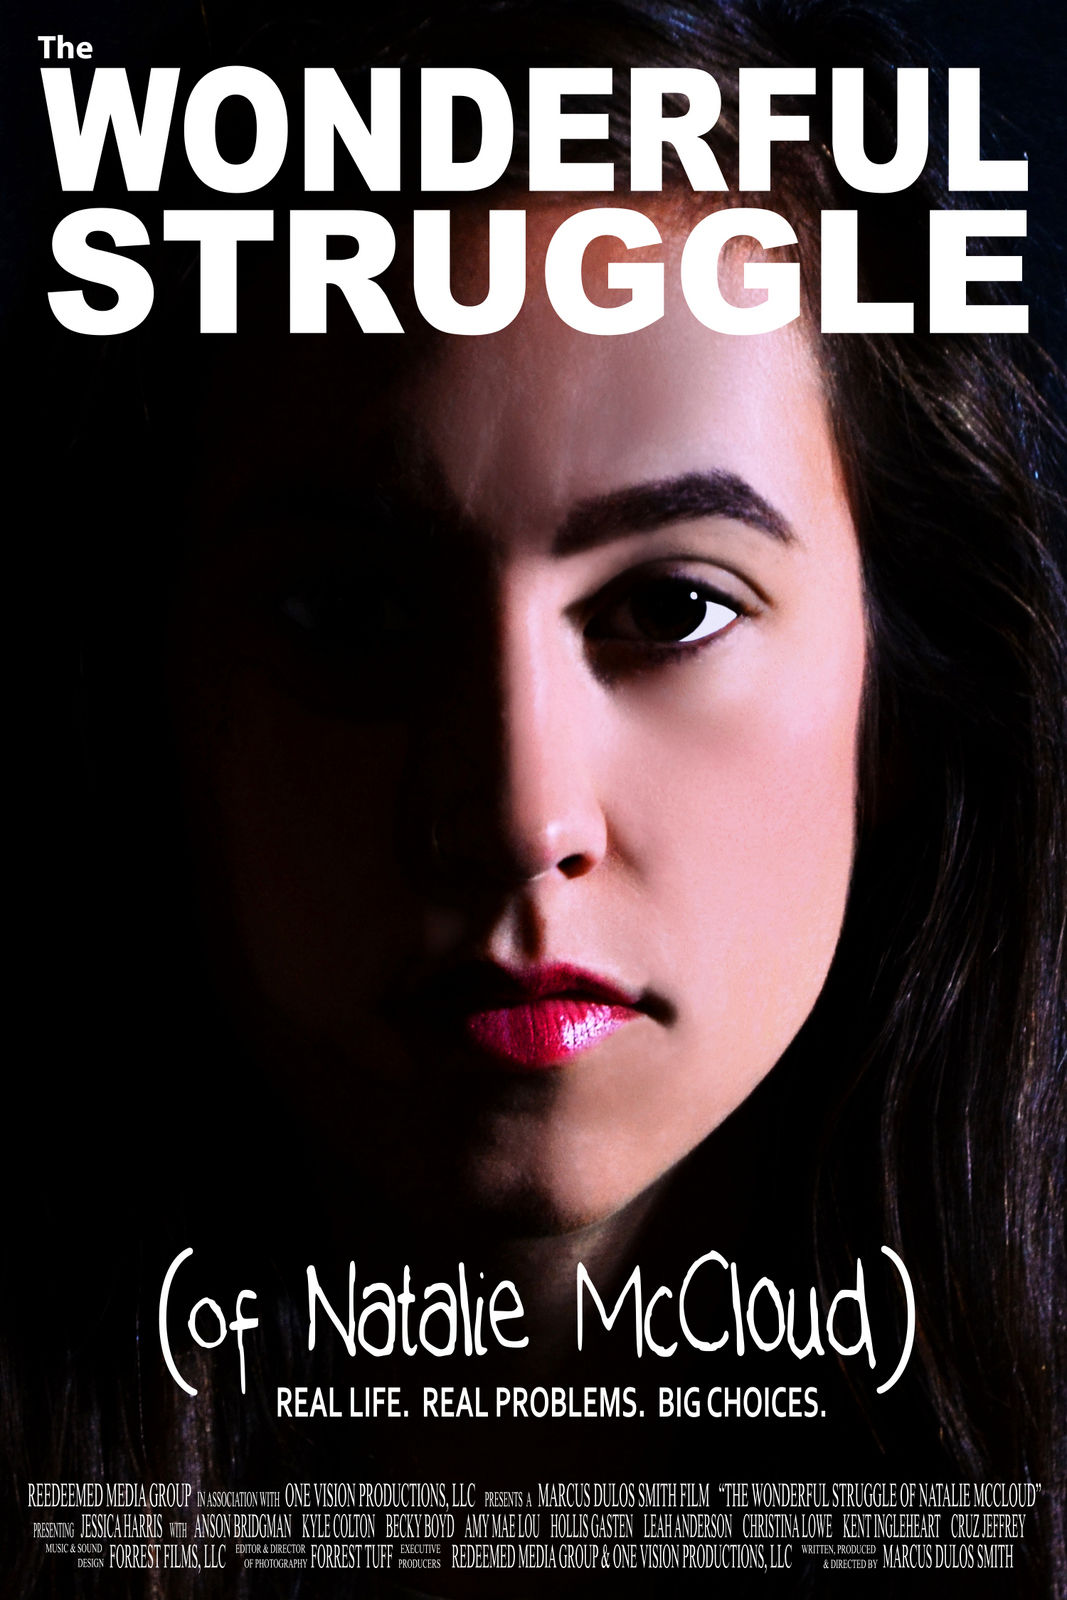 The Wonderful Struggle of Natalie McCloud